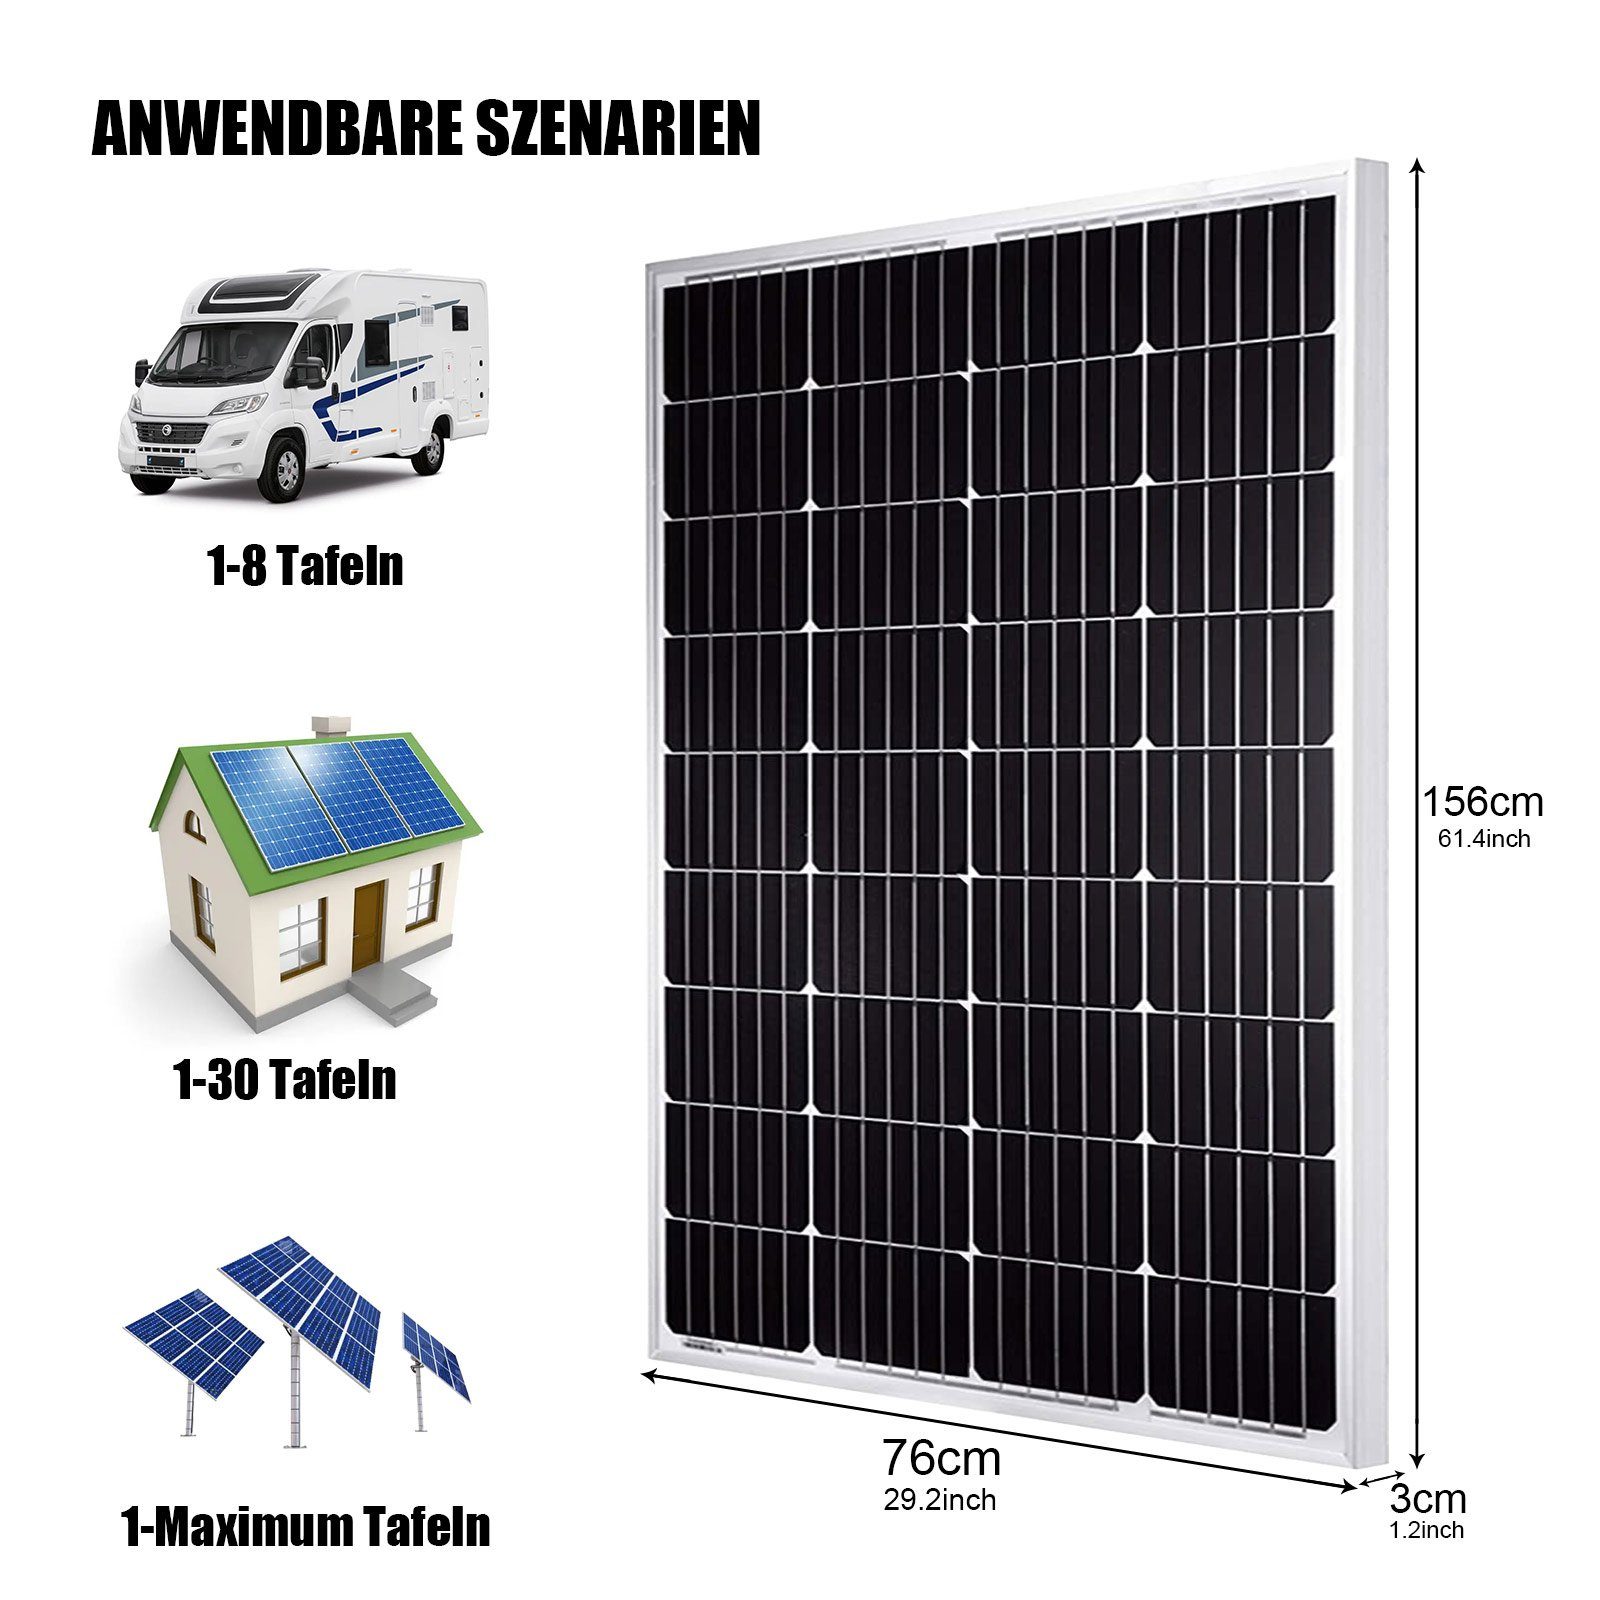 GLIESE Solaranlage 300W ausbaufähig, (1-St) hohe Umwandlung, 12V-Photovoltaik-Panel